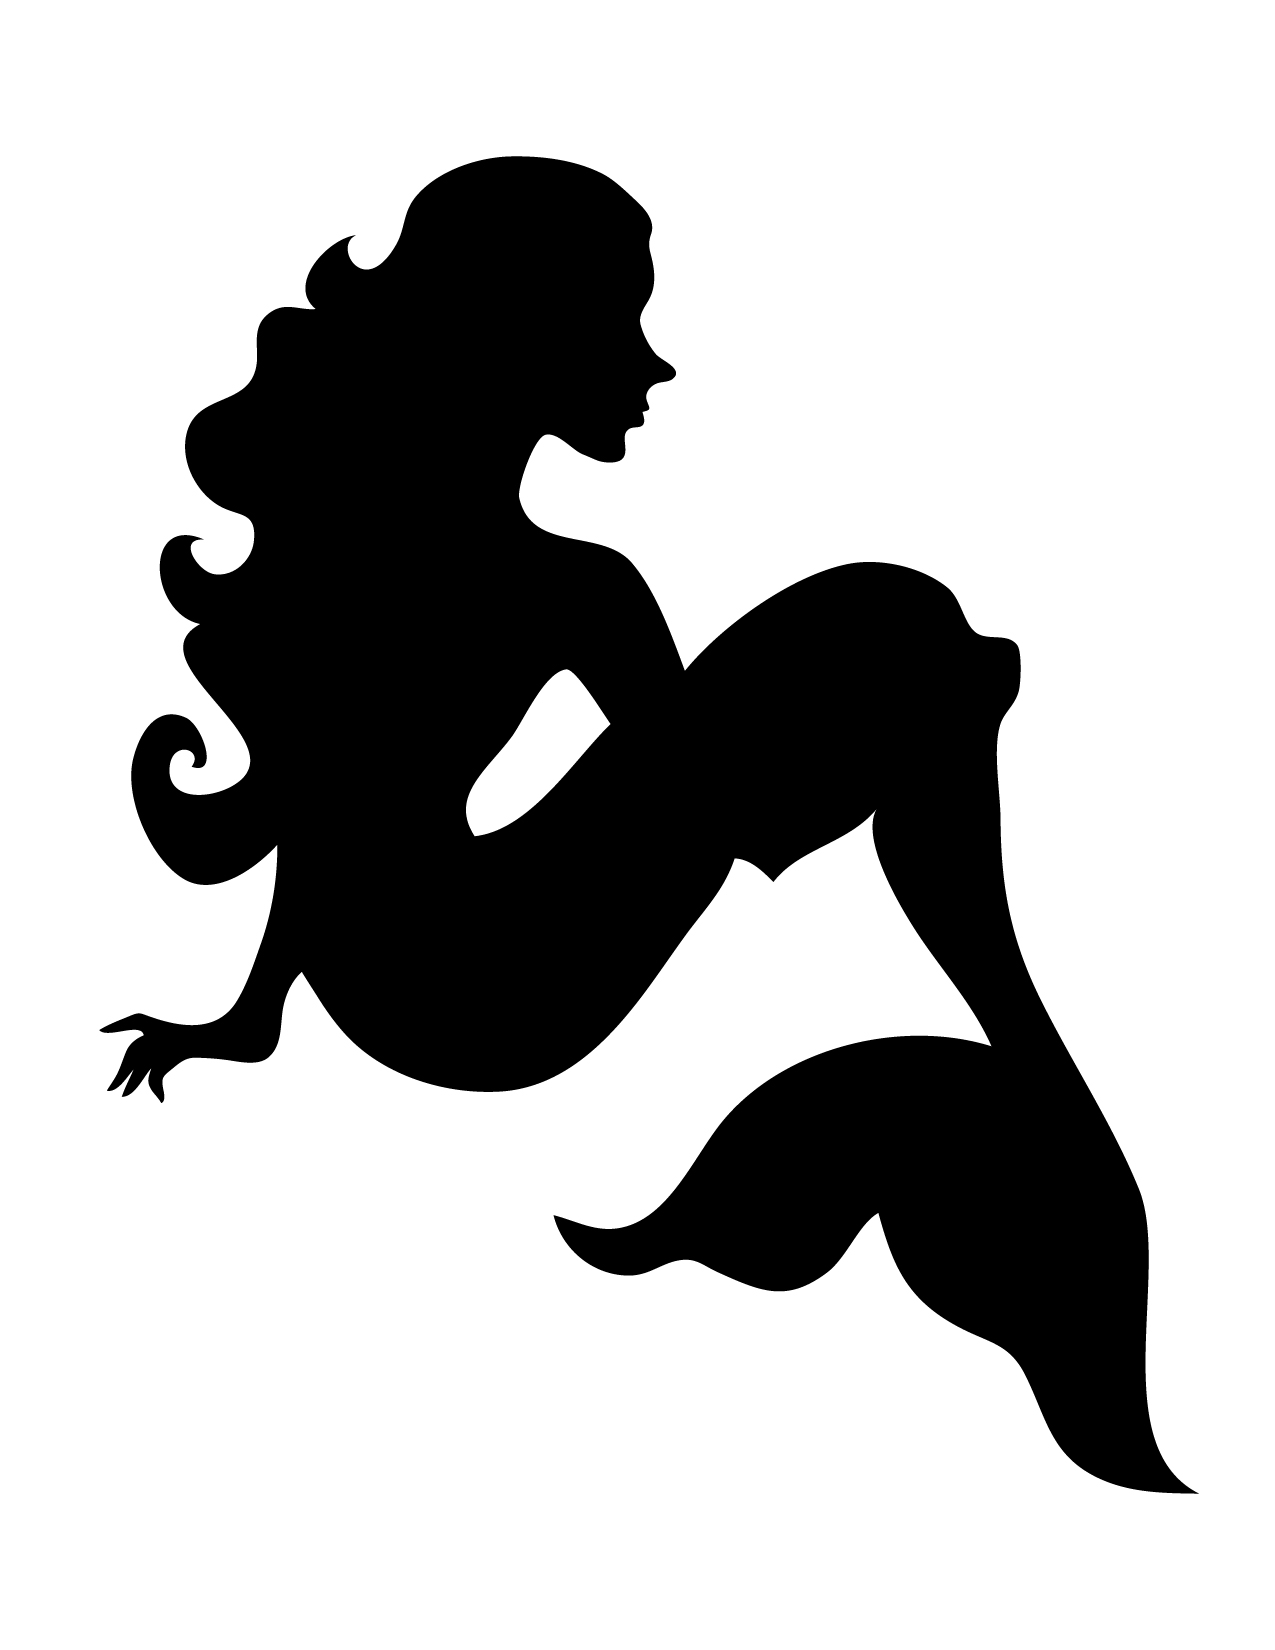 Little Mermaid Silhouette